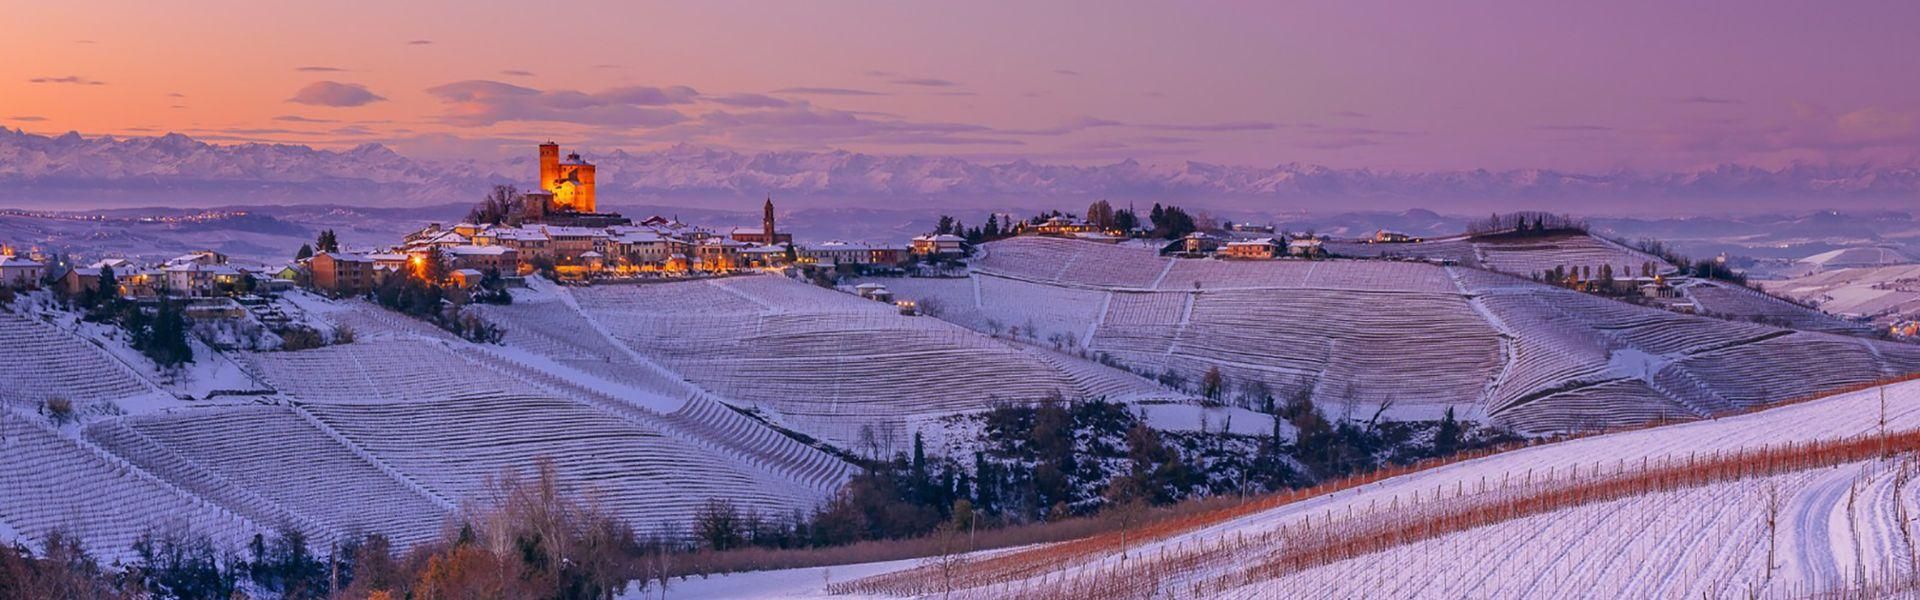 Serralunga d'Alba, vineyard Rivetto,winter